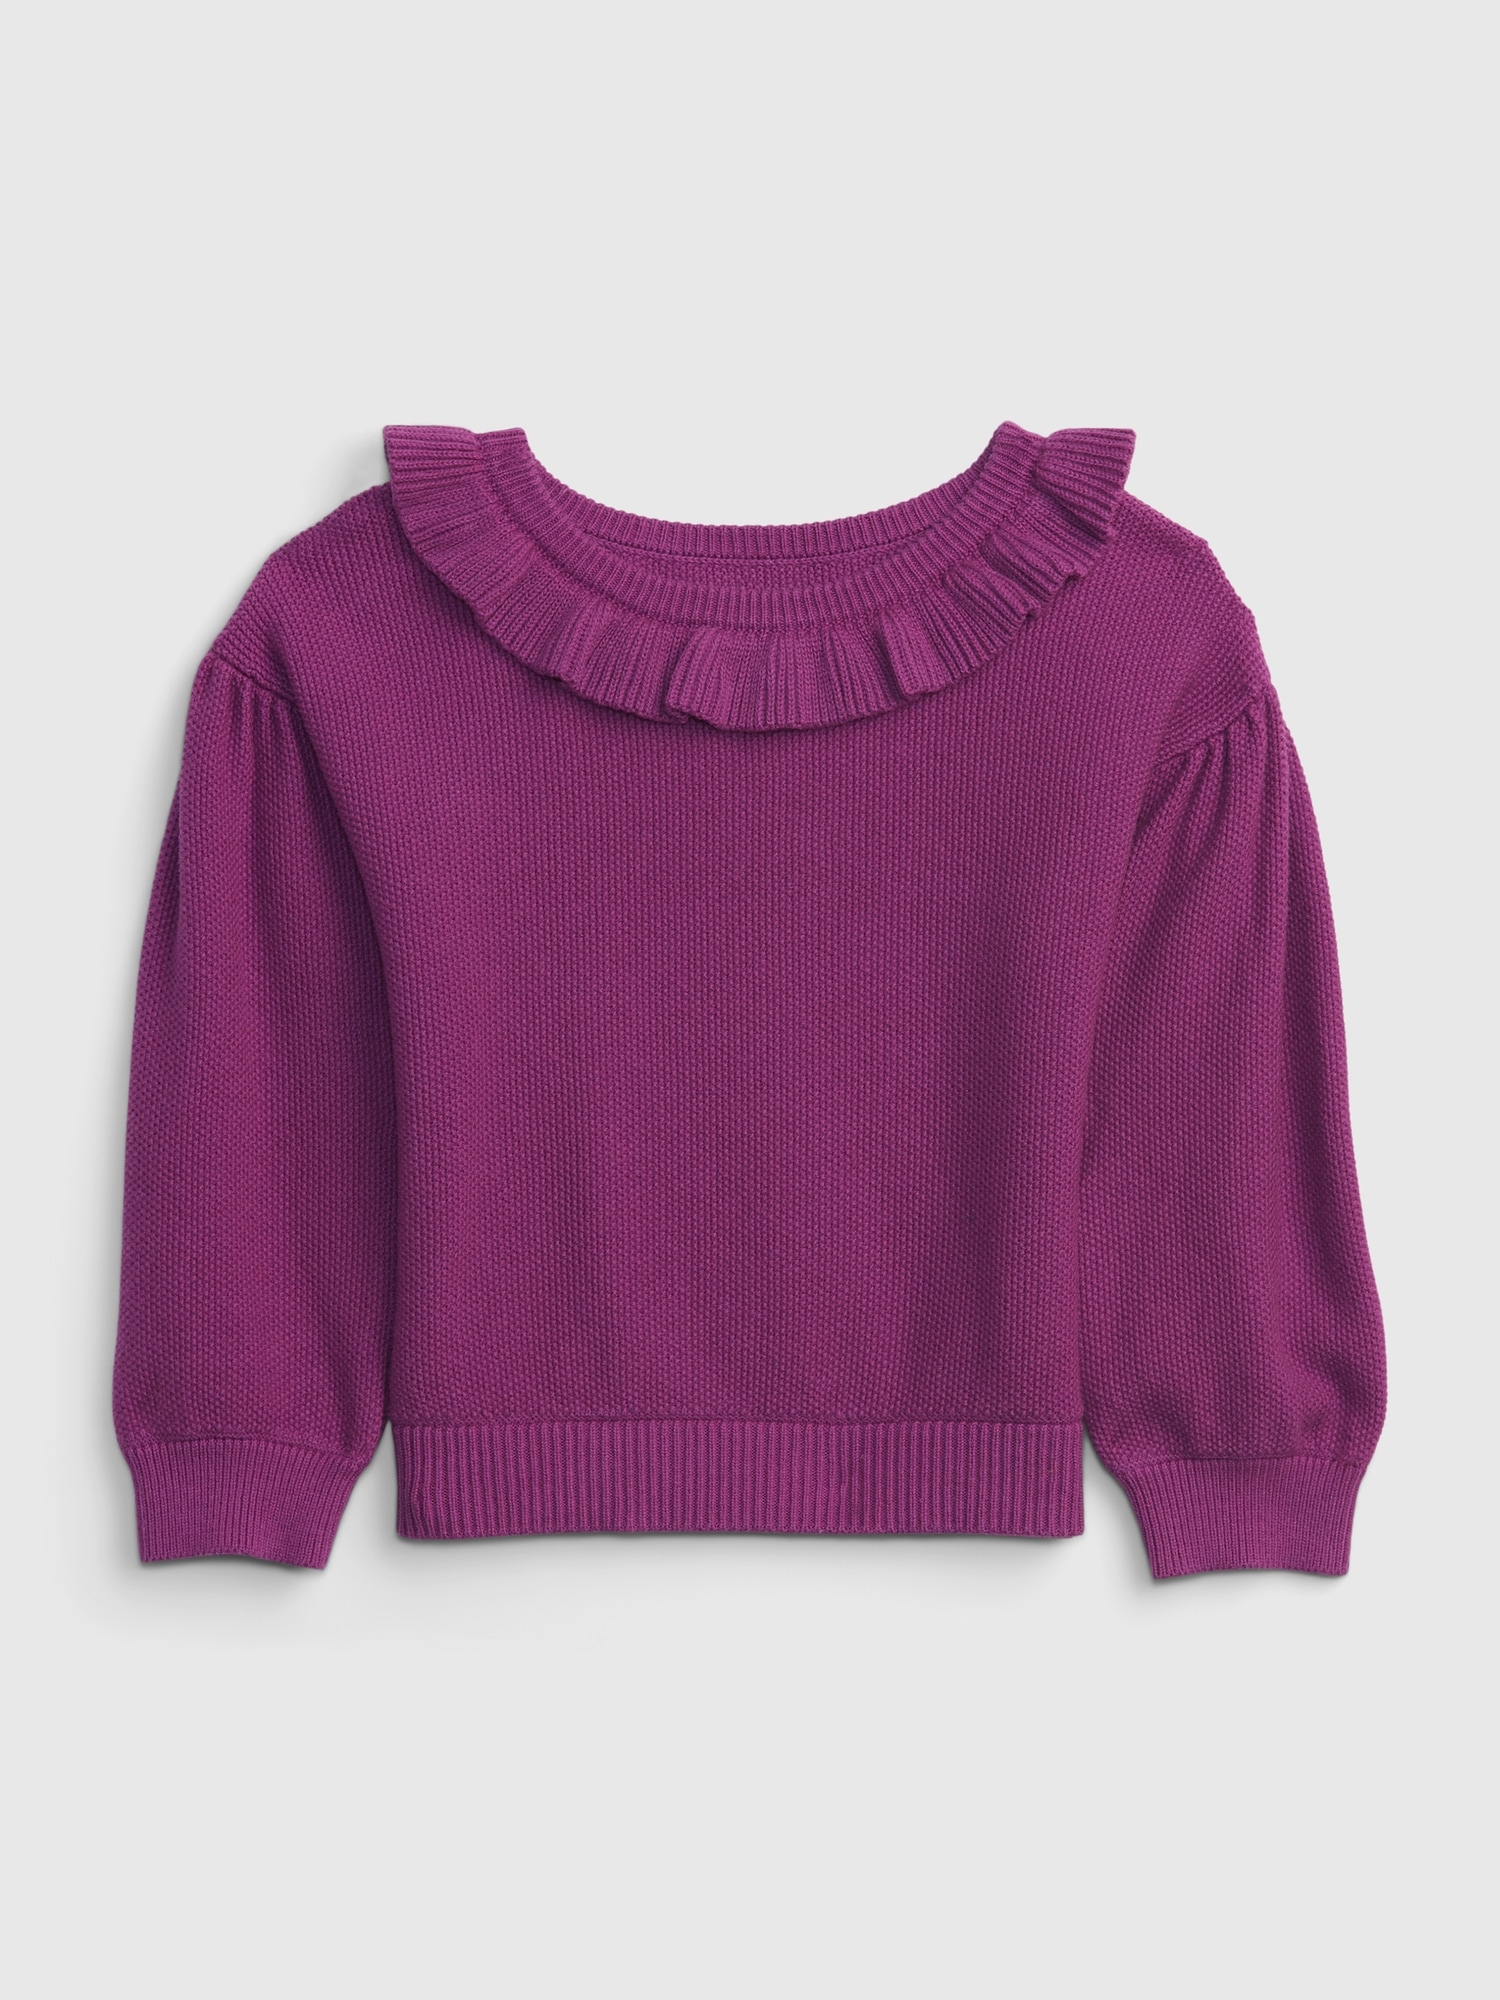 Gap Toddler Ruffle Sweater